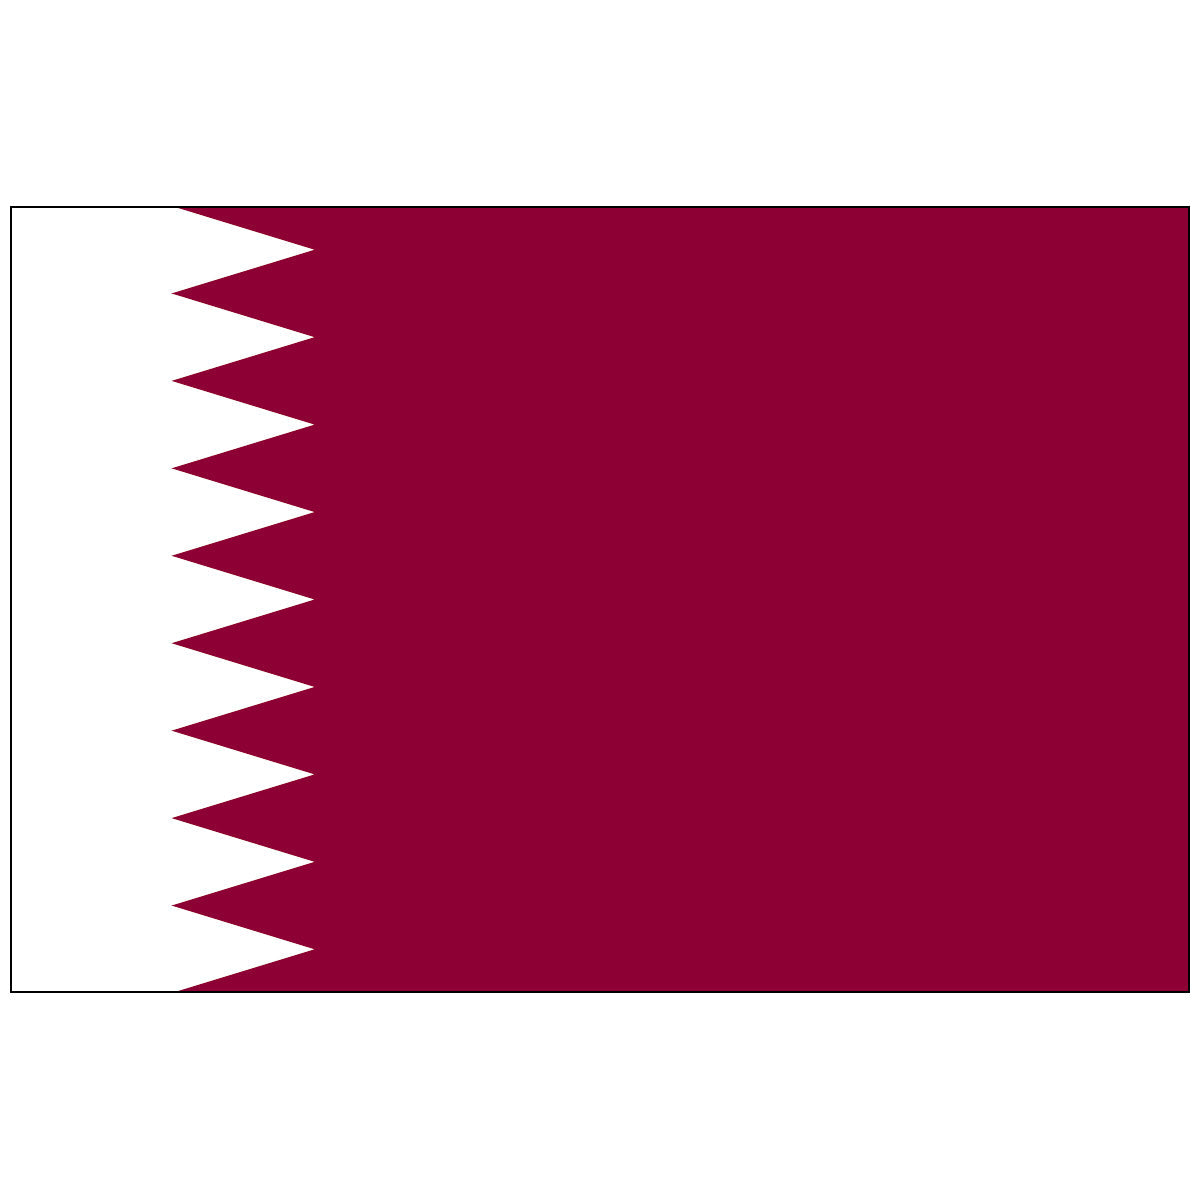 Qatar - Nylon World Flag